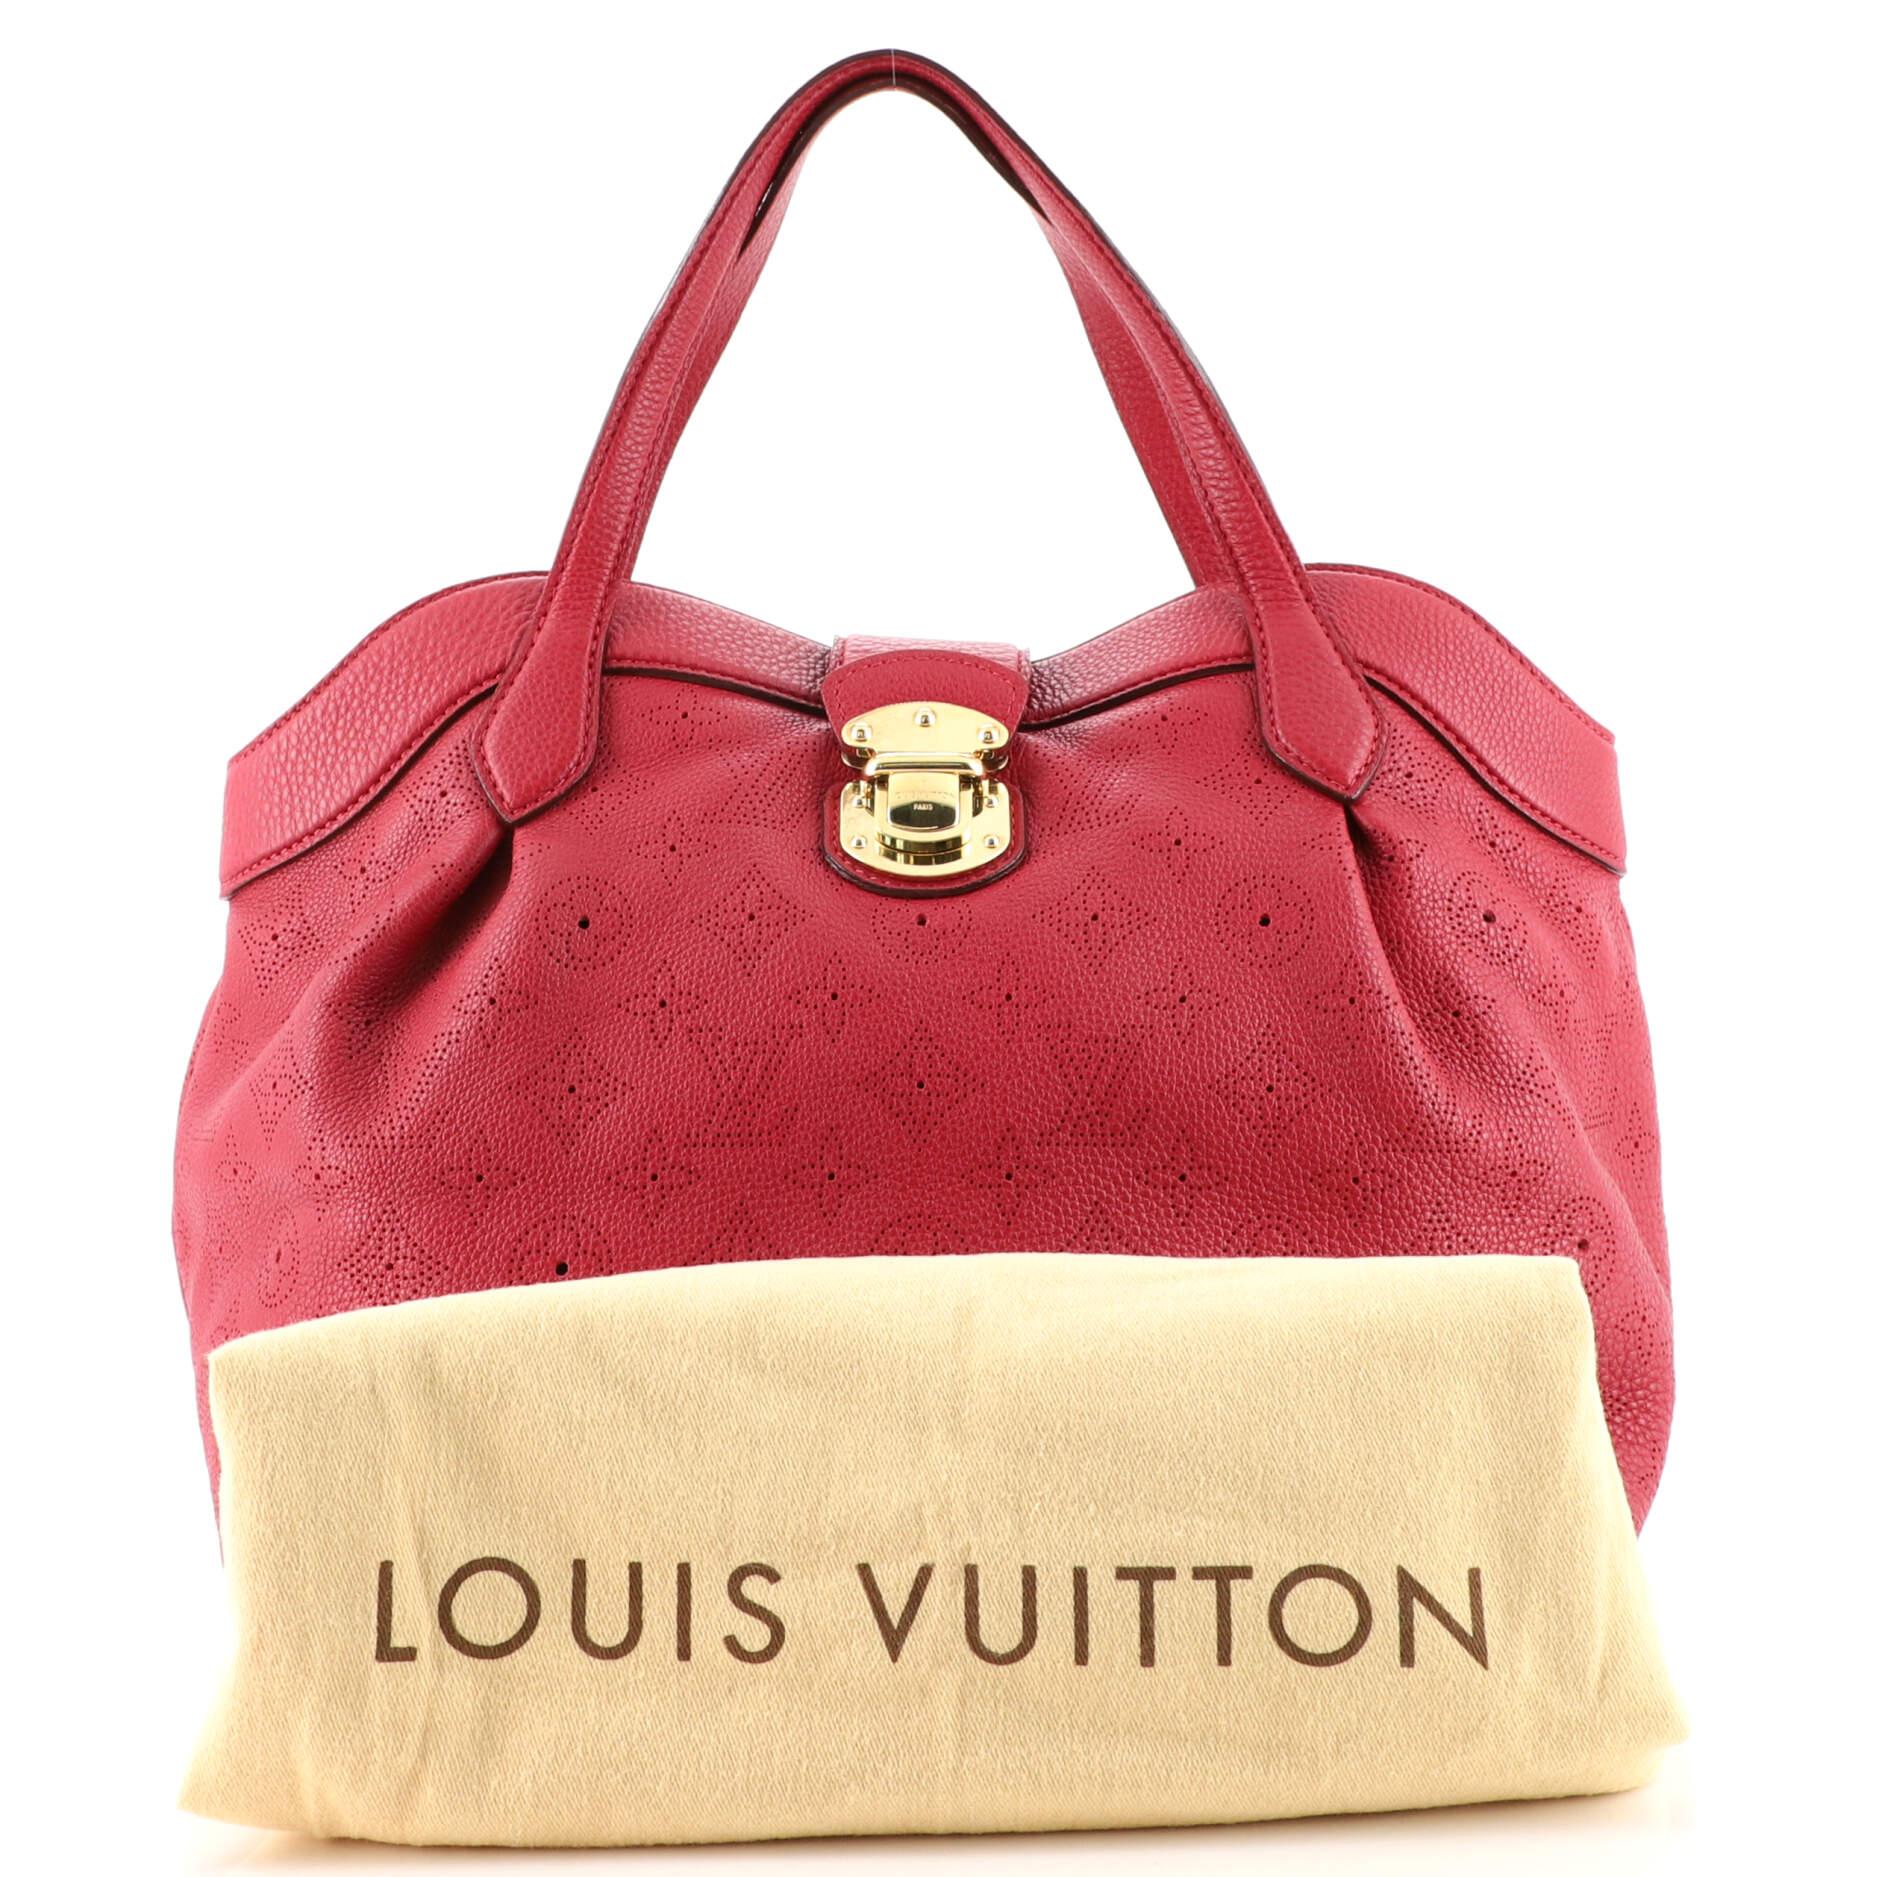 Louis Vuitton Albania - 2 For Sale on 1stDibs